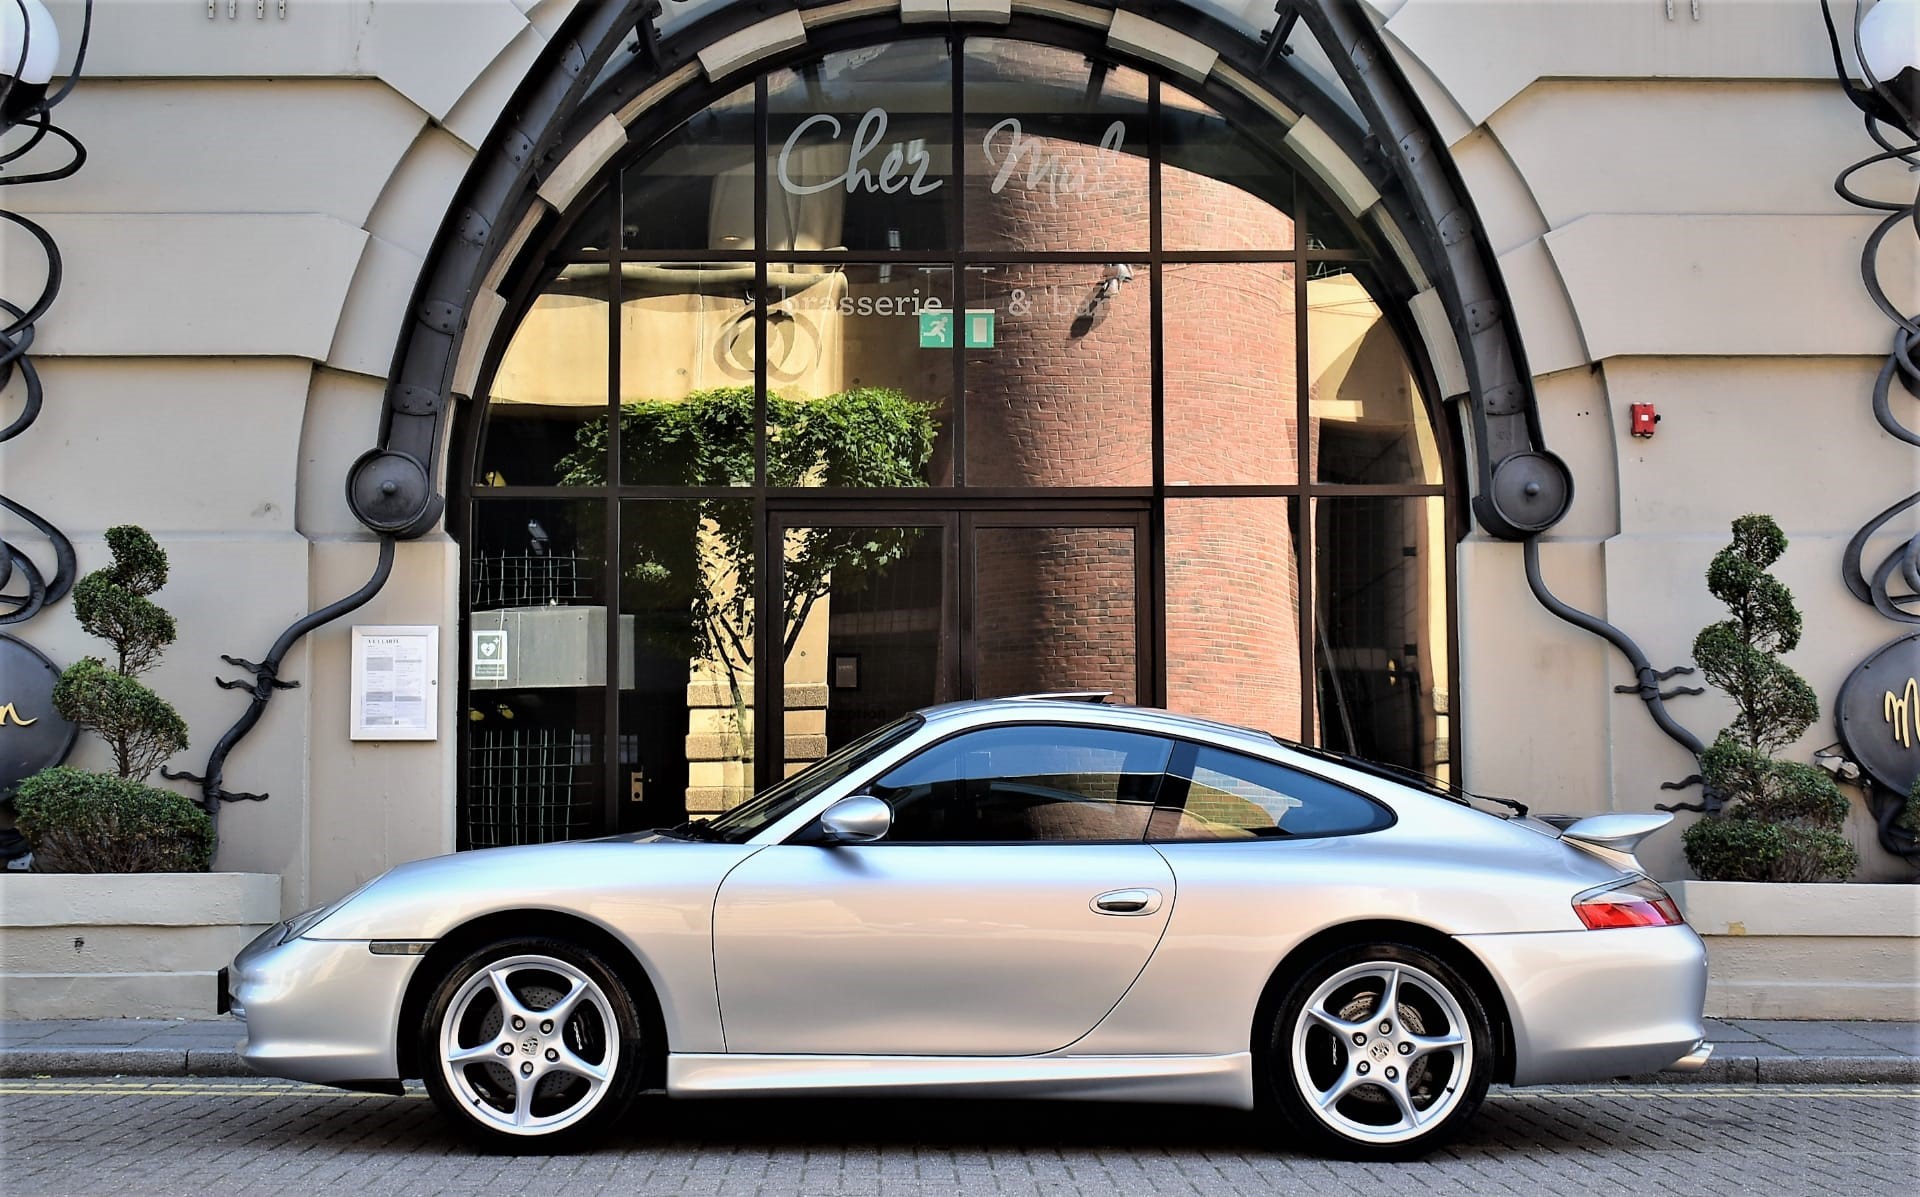 Used Porsche 911 for sale in Gateshead, Tyne and Wear | Silverwood Cars Ltd